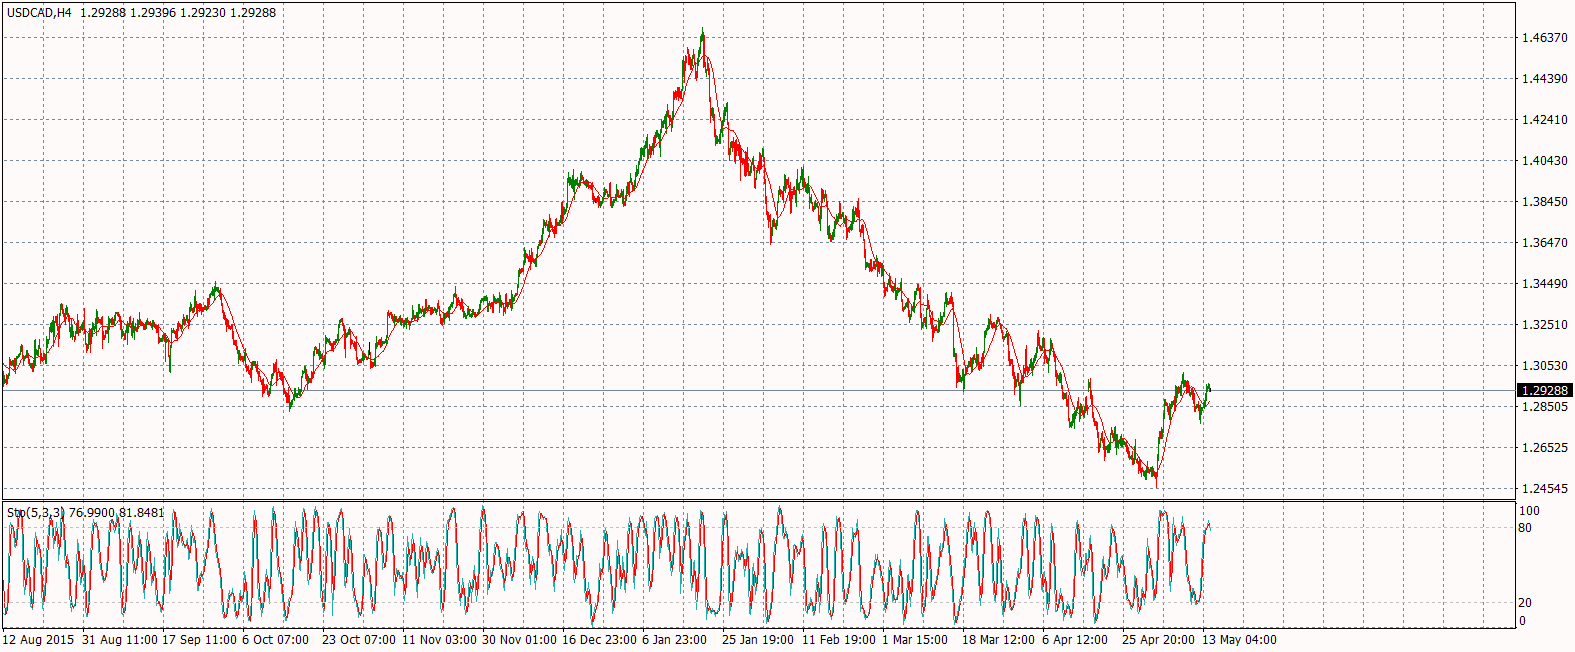 USD/CAD 4 Hourly Chart